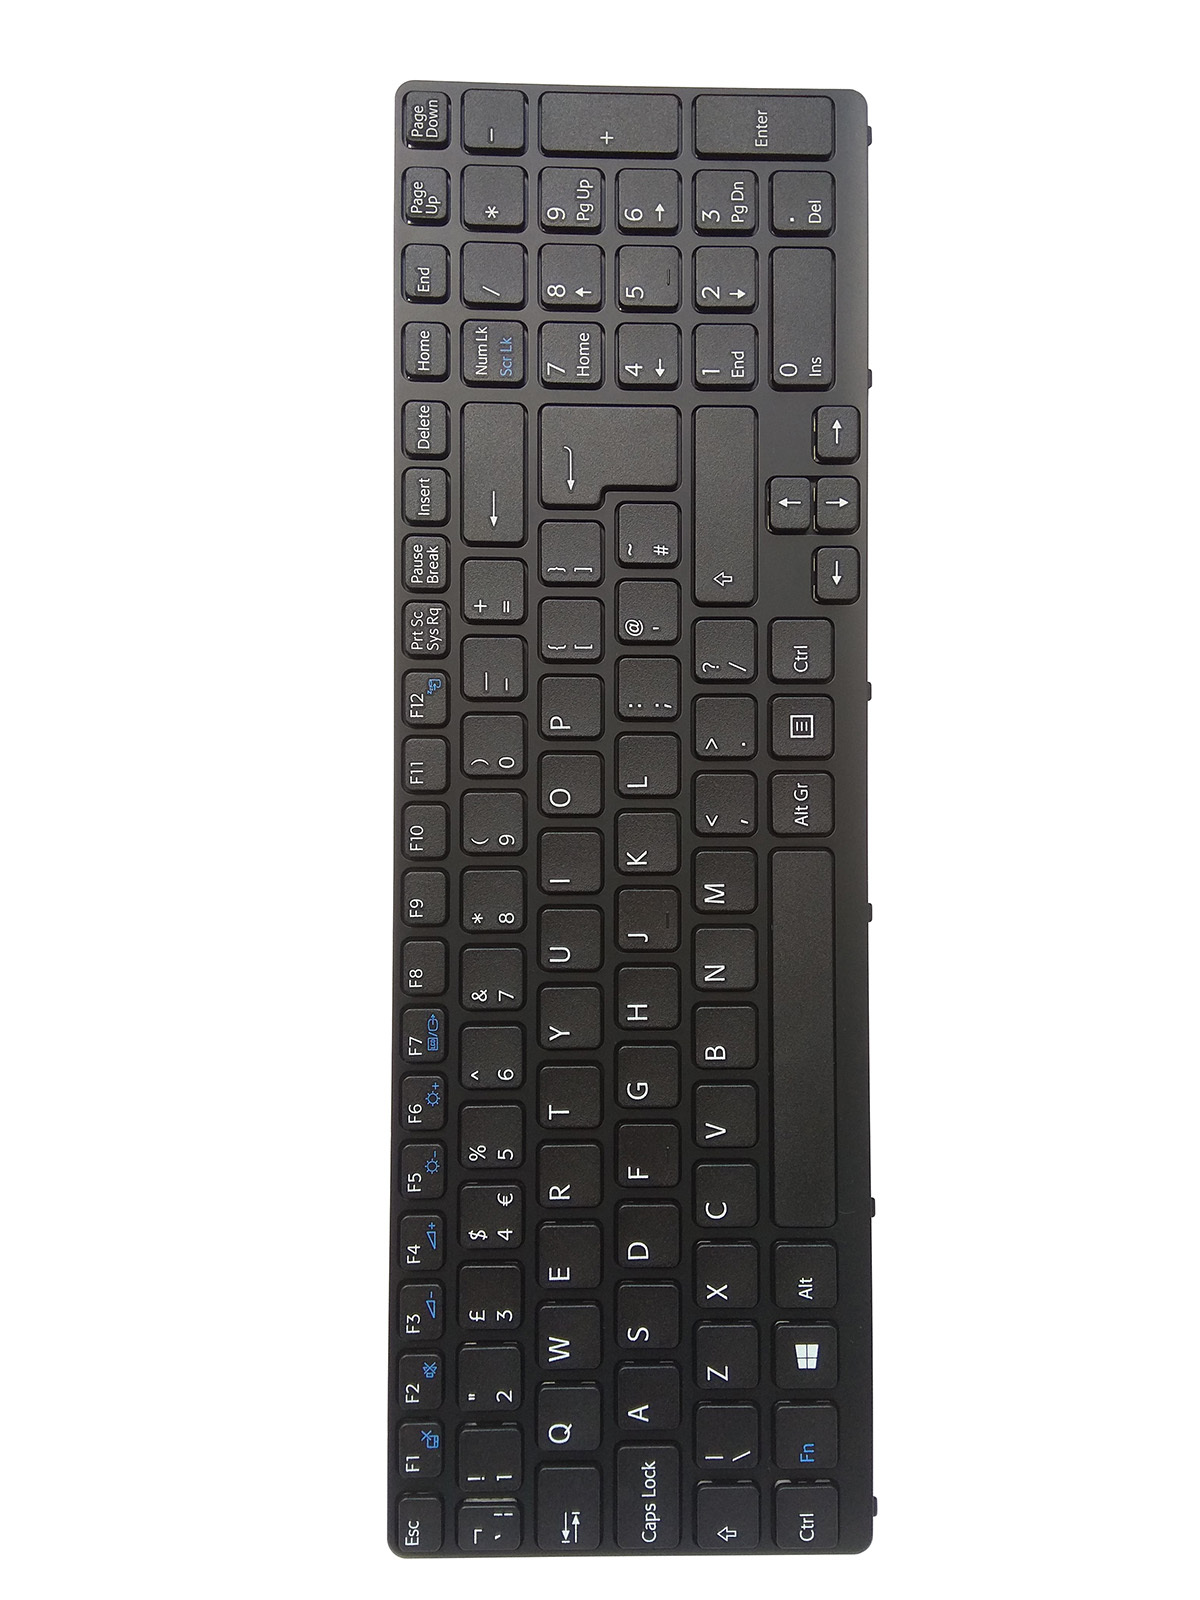 Sony VAIO SVE15113EN Keyboard 149094311GB Sony VAIO SVE1511Y1E Keyboard - $59.99